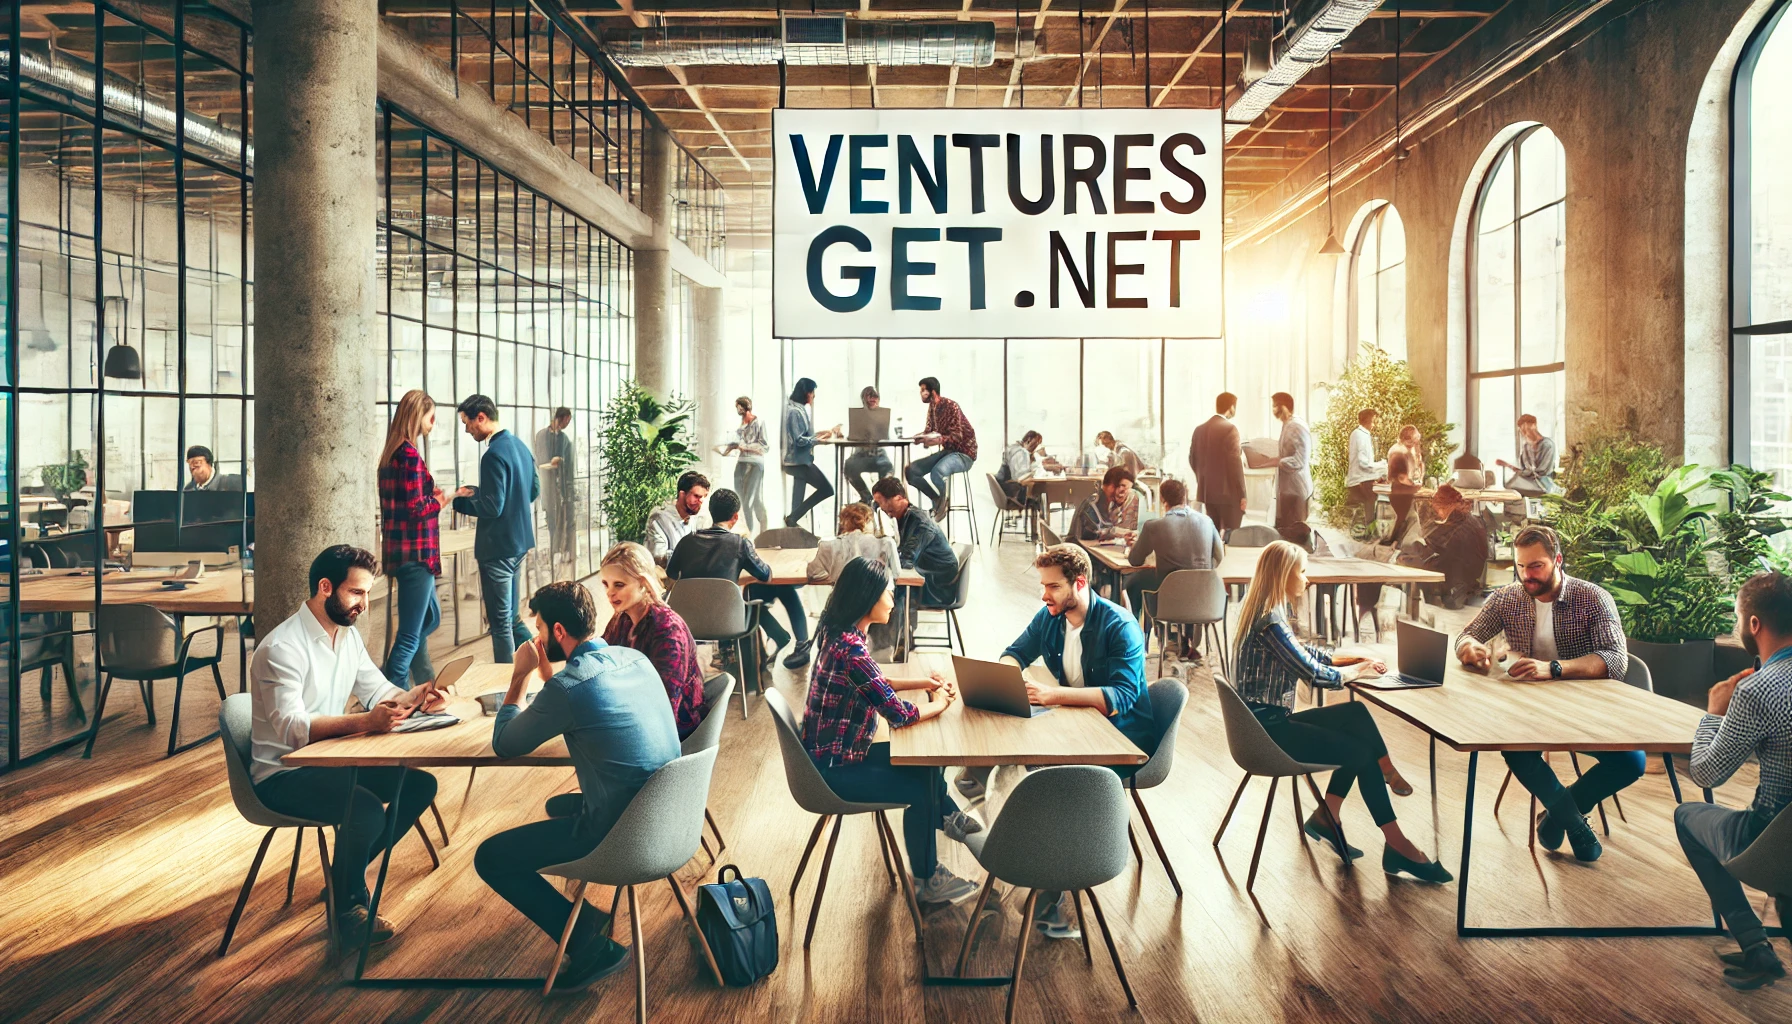 VenturesGet.net: Empowering Entrepreneurs and Innovators